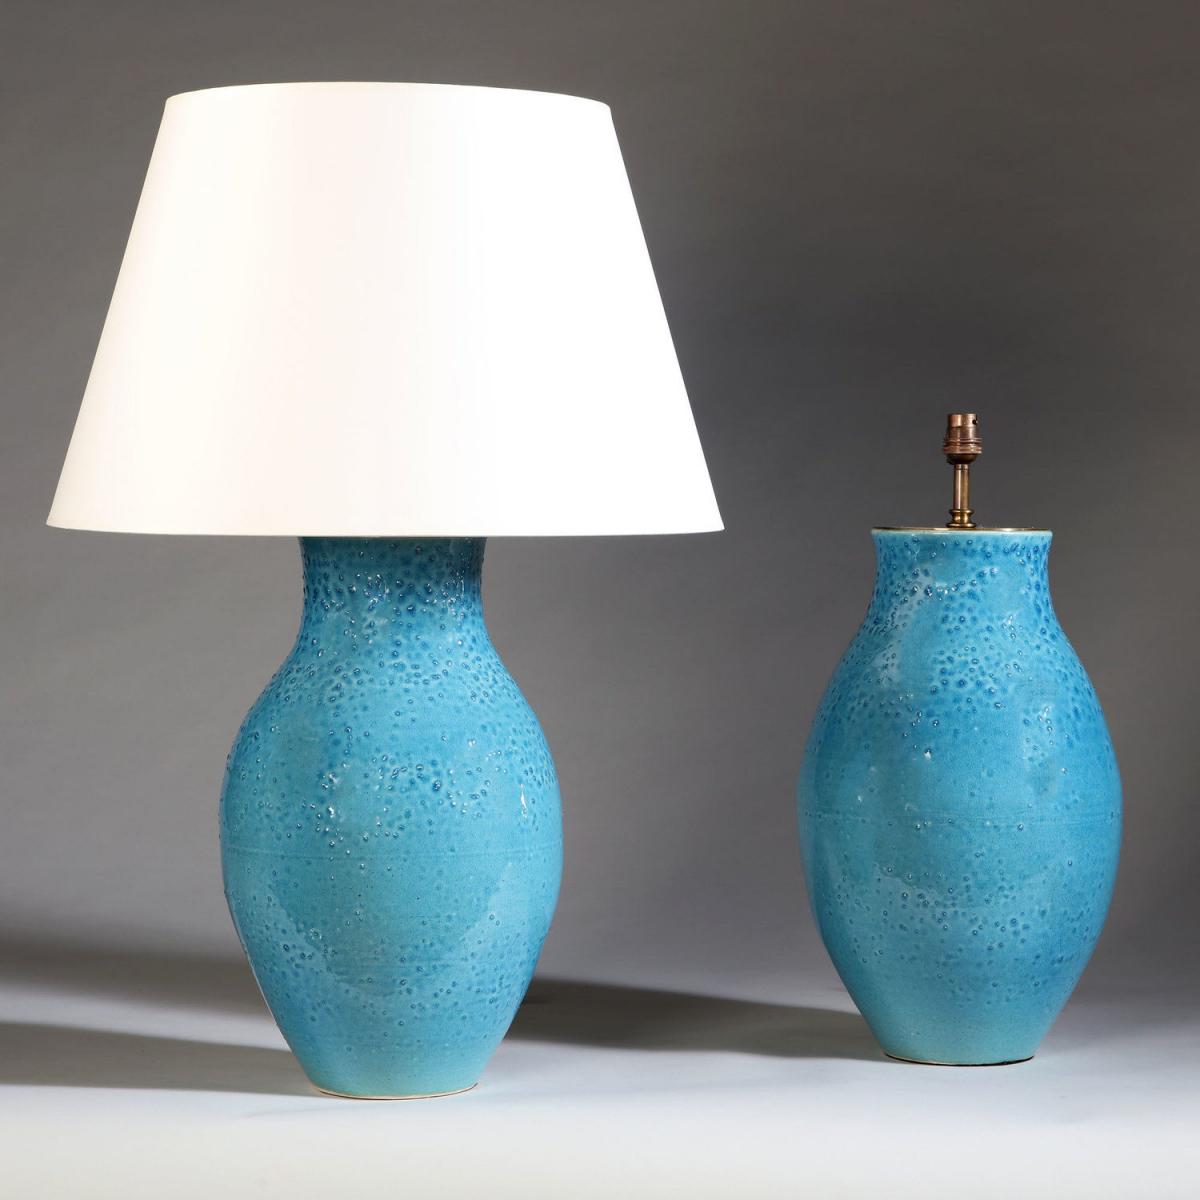 A Pair of Blue Glaze Studio Pottery Vases